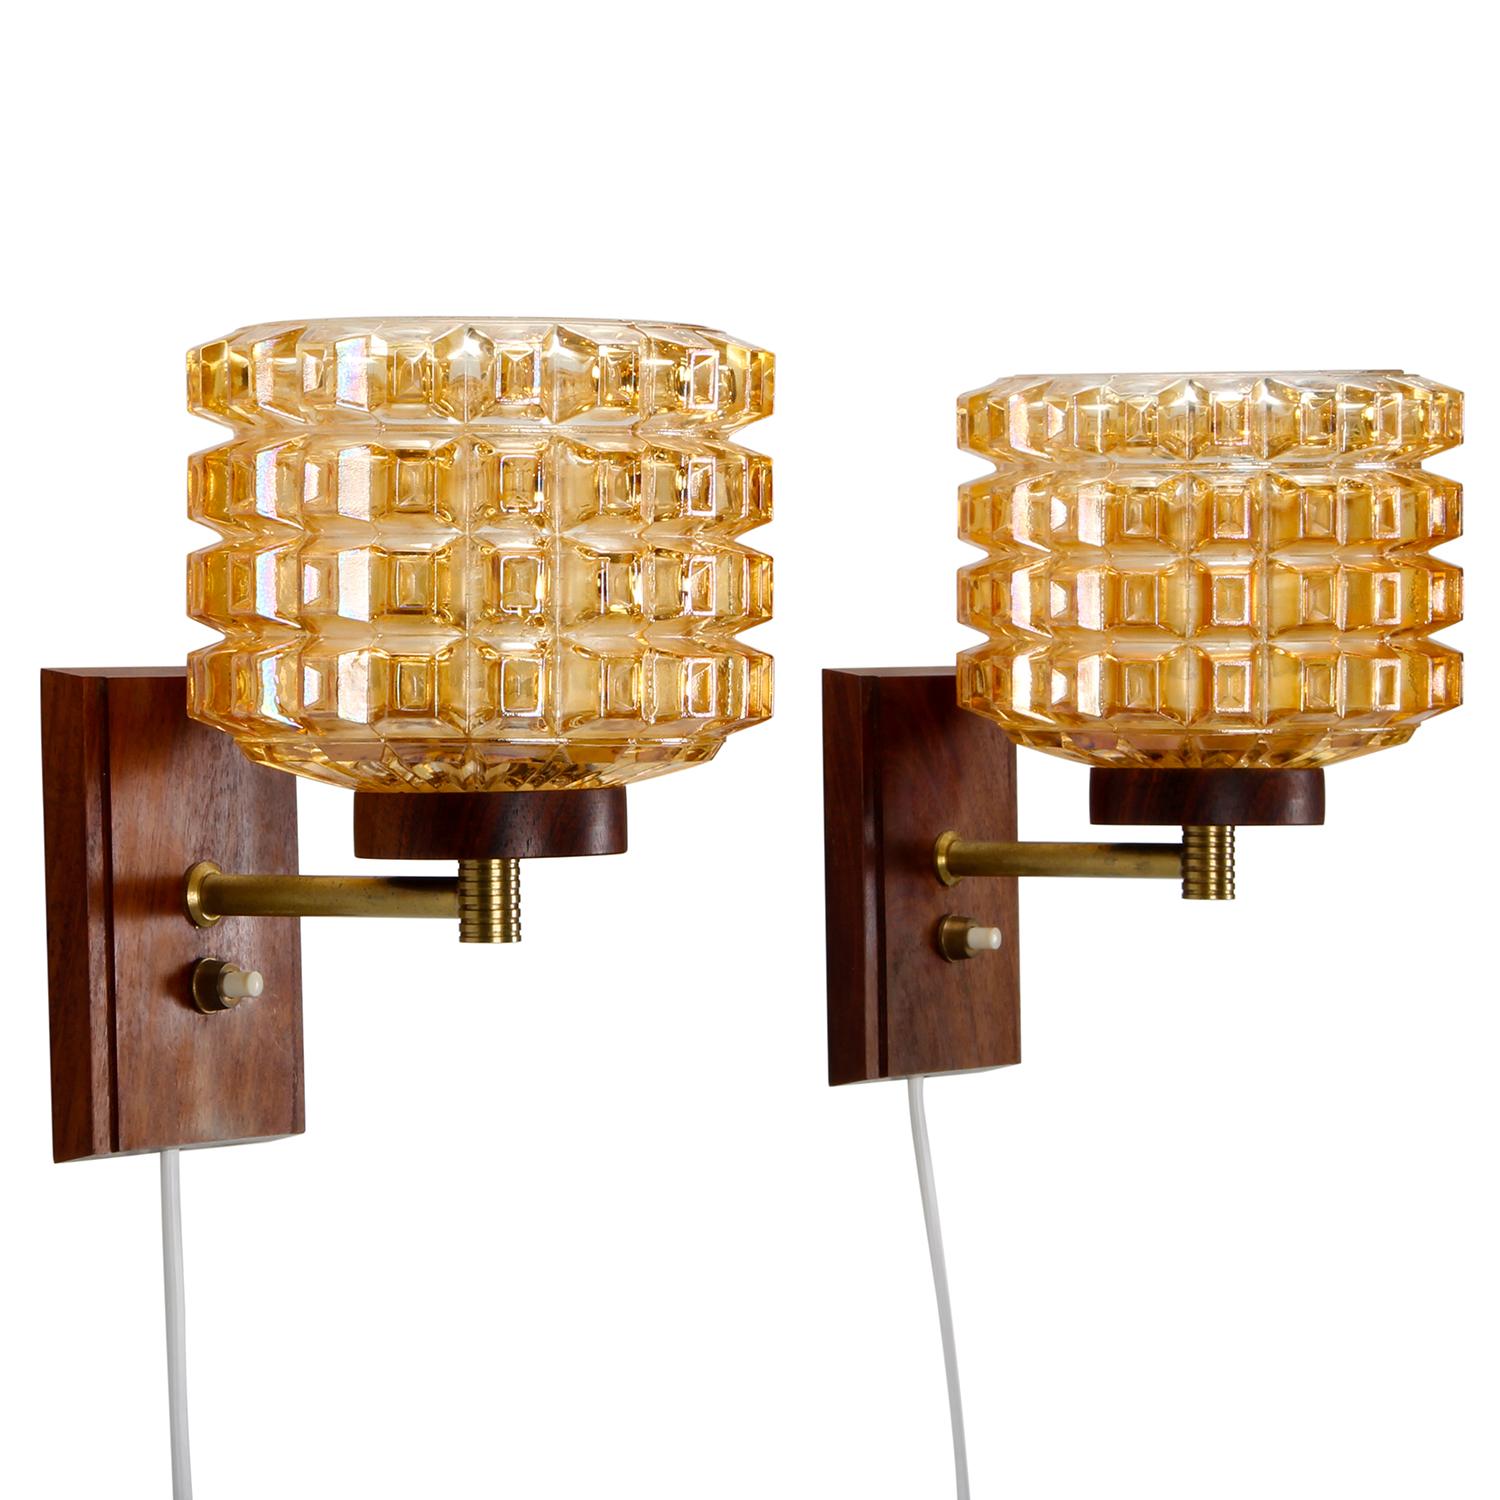 Pressed Glass & Rosewood Wall Lamps ‘Pair’ 1950s Scandinavian Midcentury Design